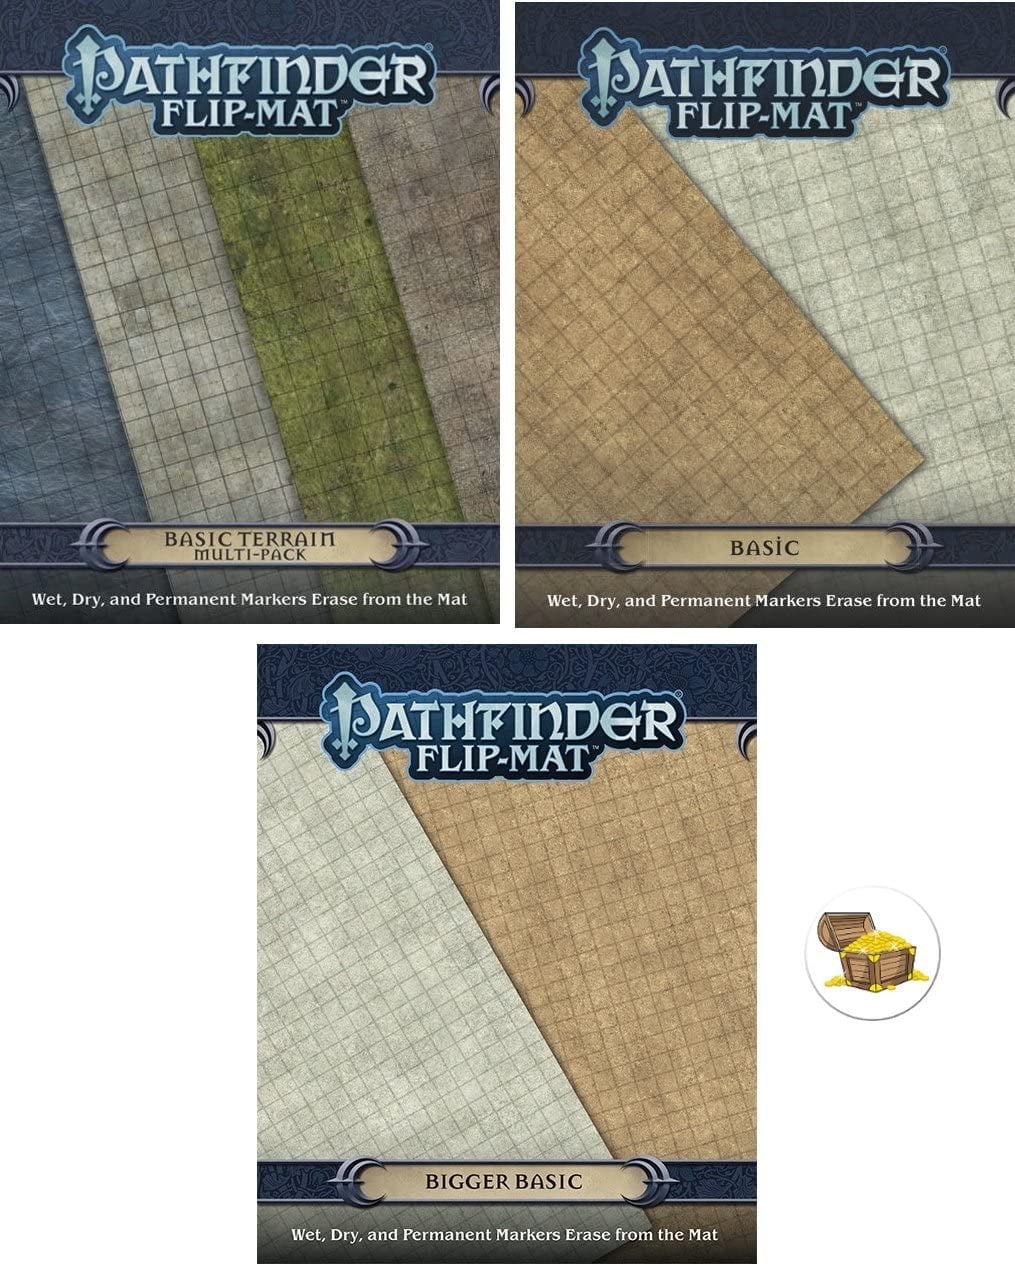 Pathfinder Flip-Mat Basic 